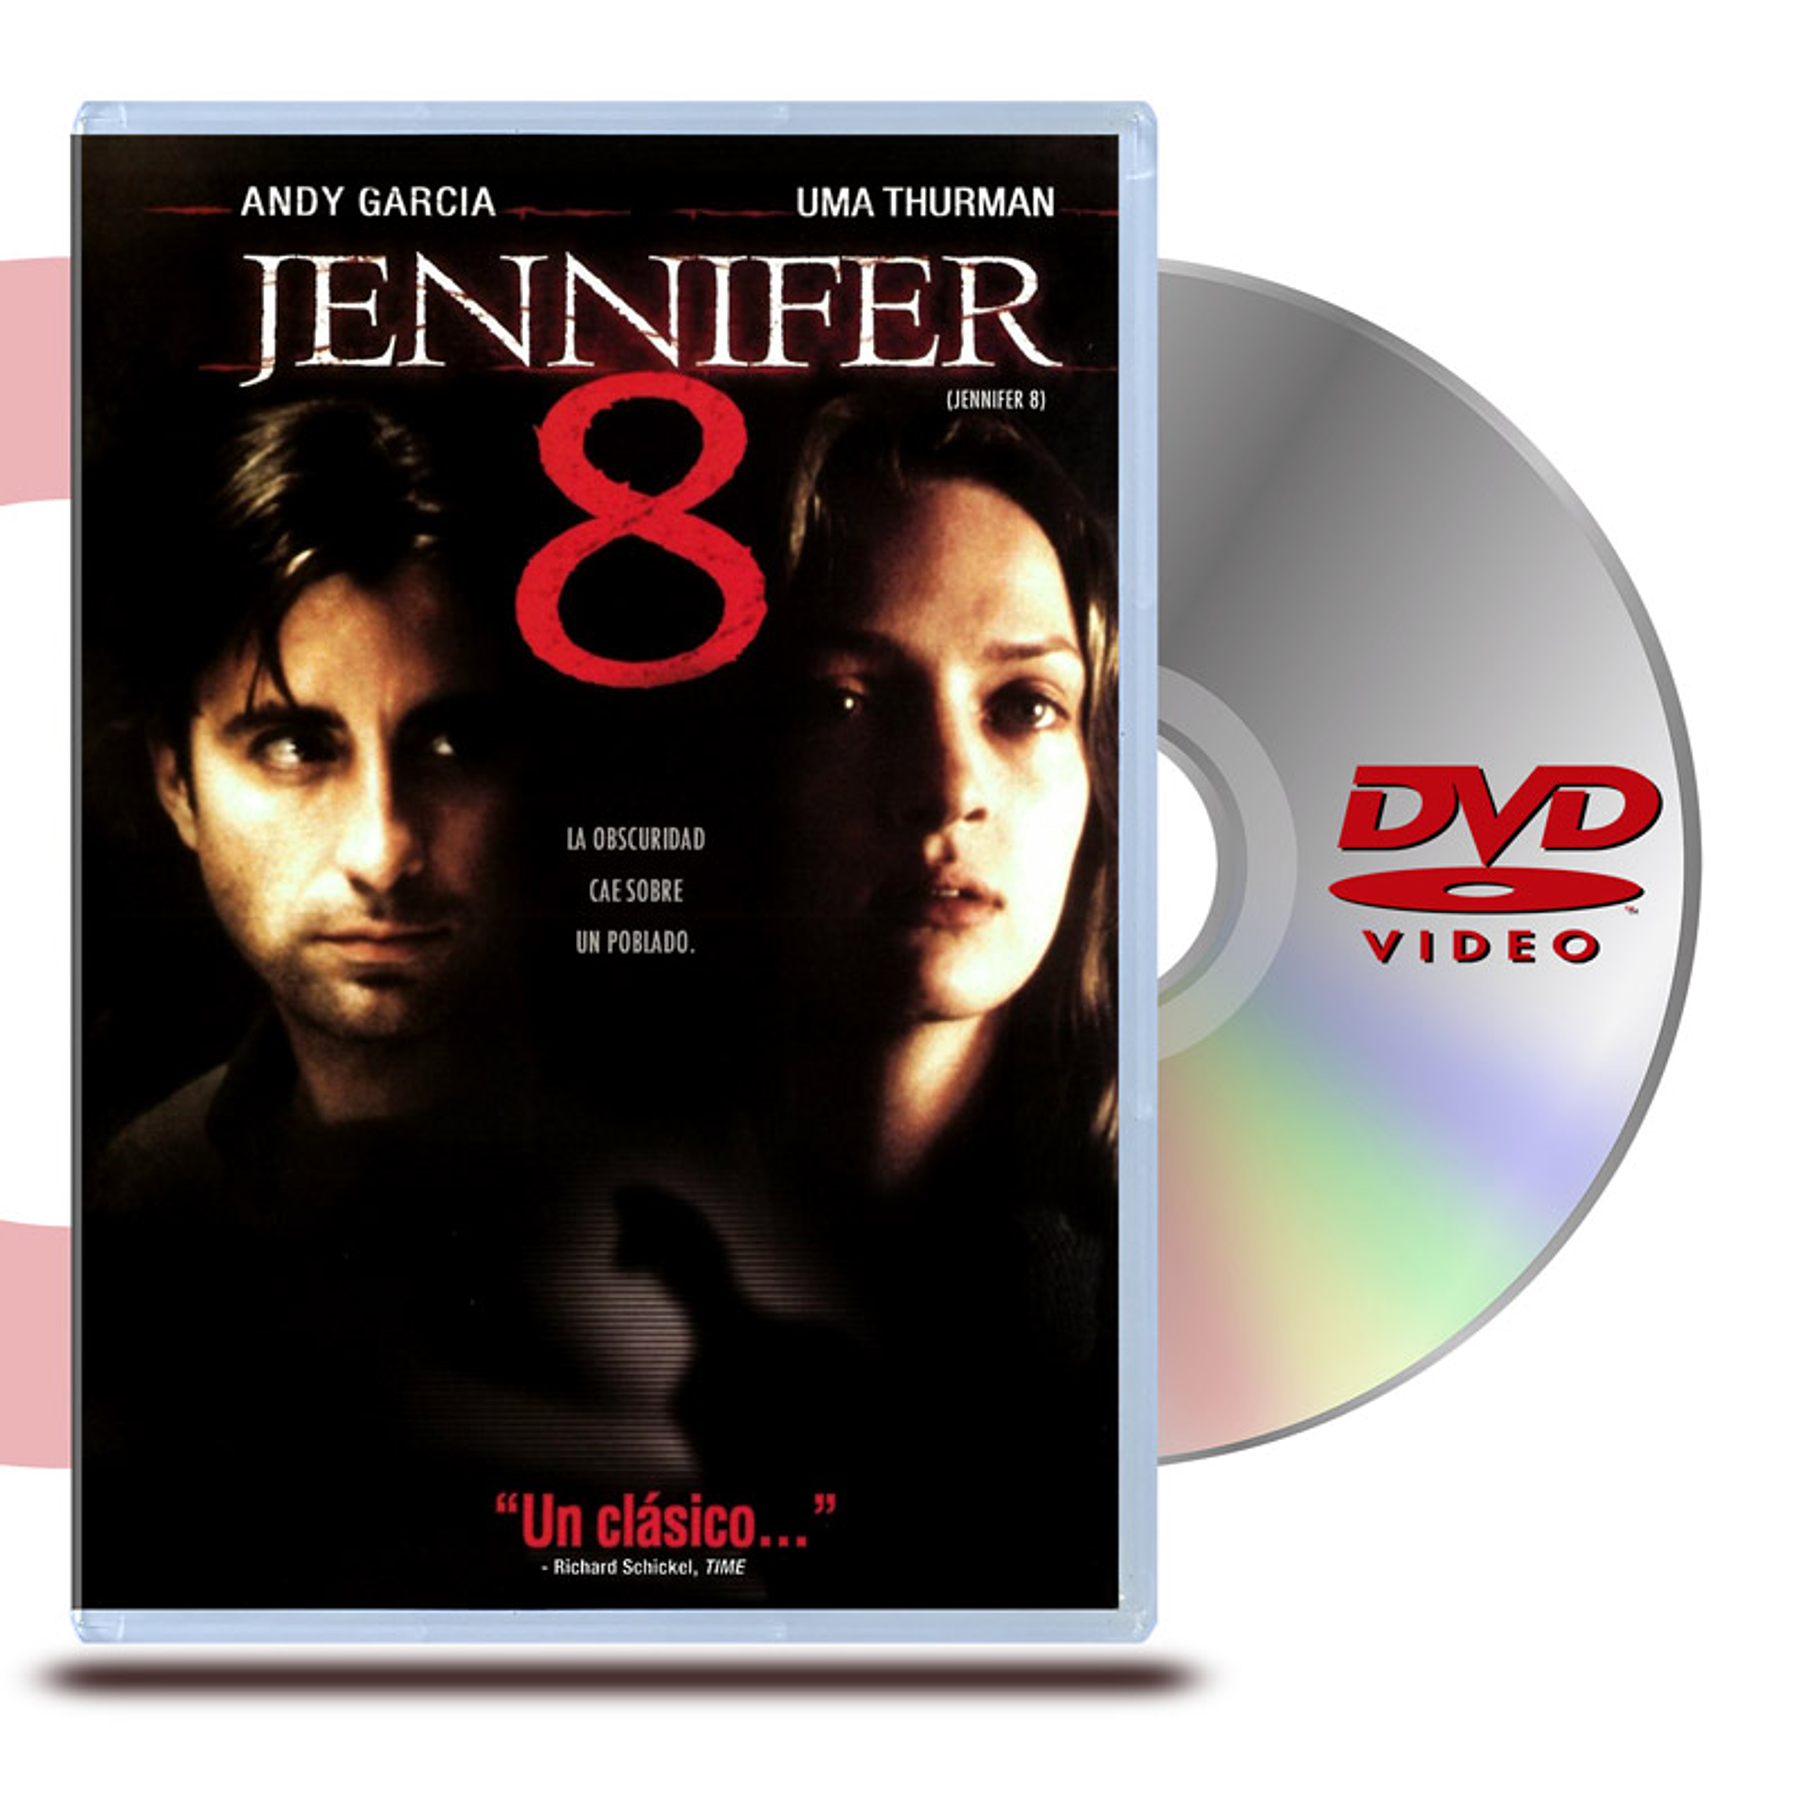 DVD JENNIFER 8